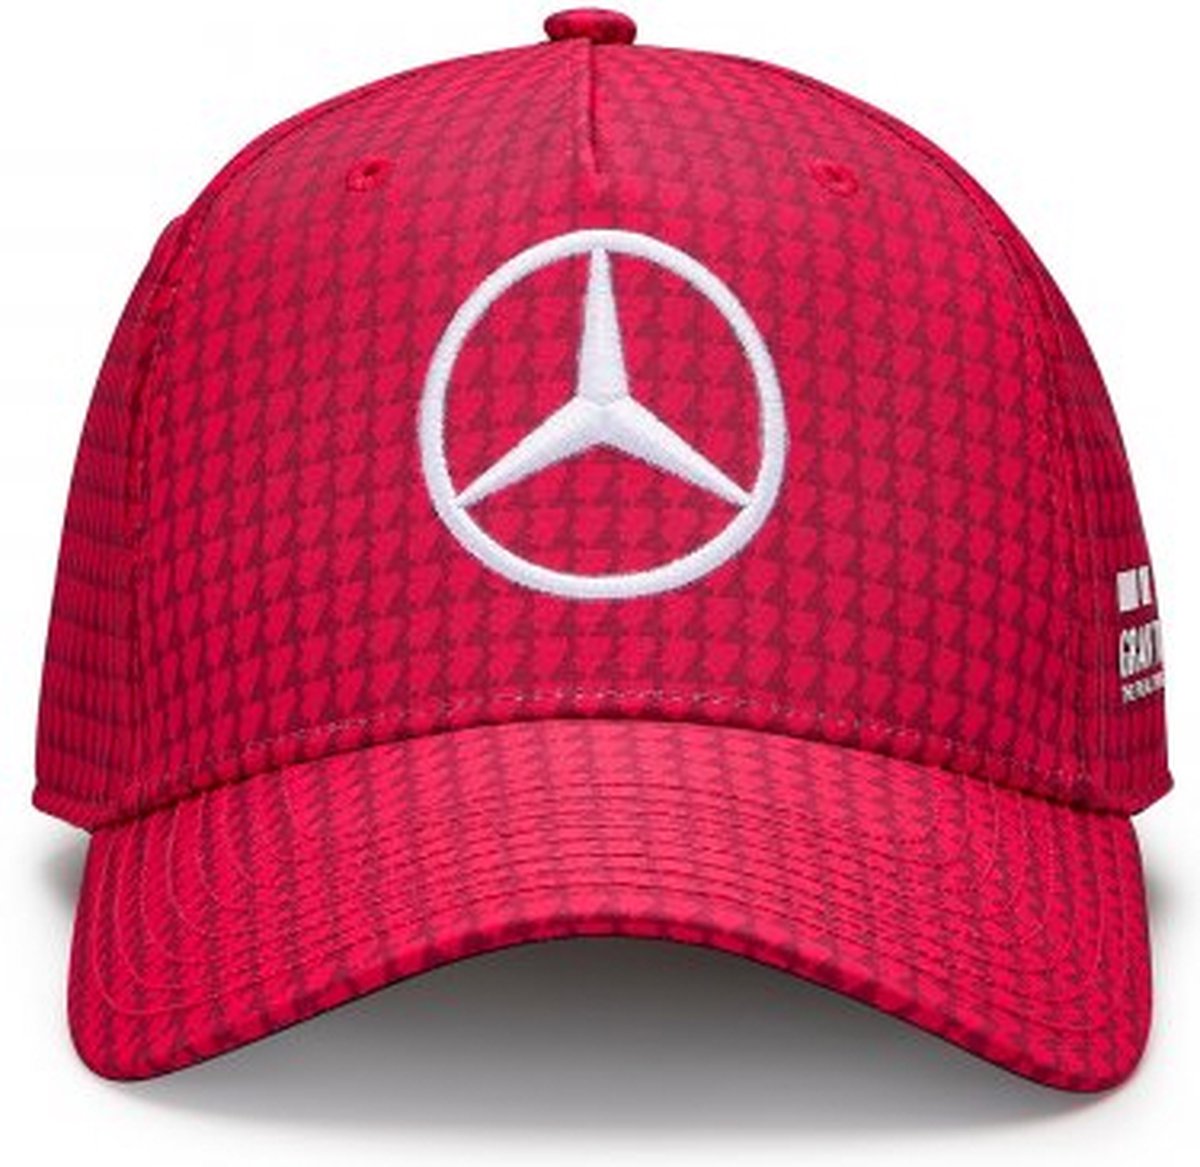 Mercedes AMG Petronas Hamilton Cap Red